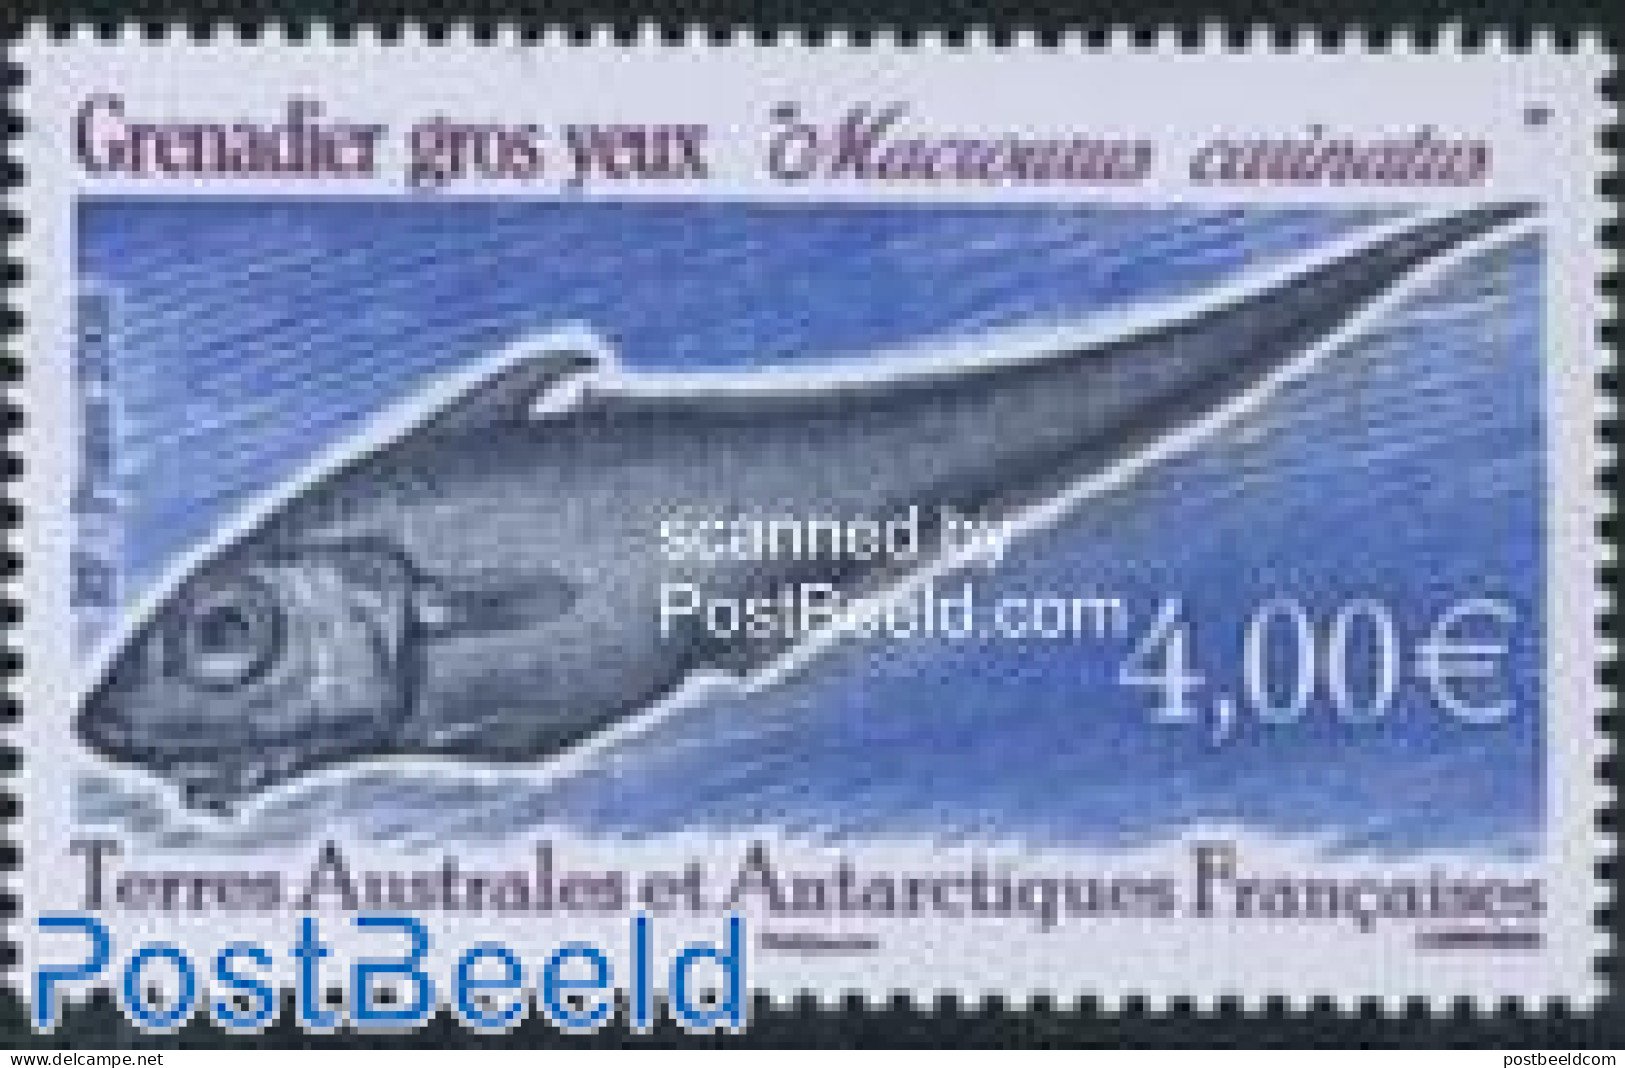 French Antarctic Territory 2008 Fish (Grenadier Gros Yeux) 1v, Mint NH, Nature - Fish - Ungebraucht